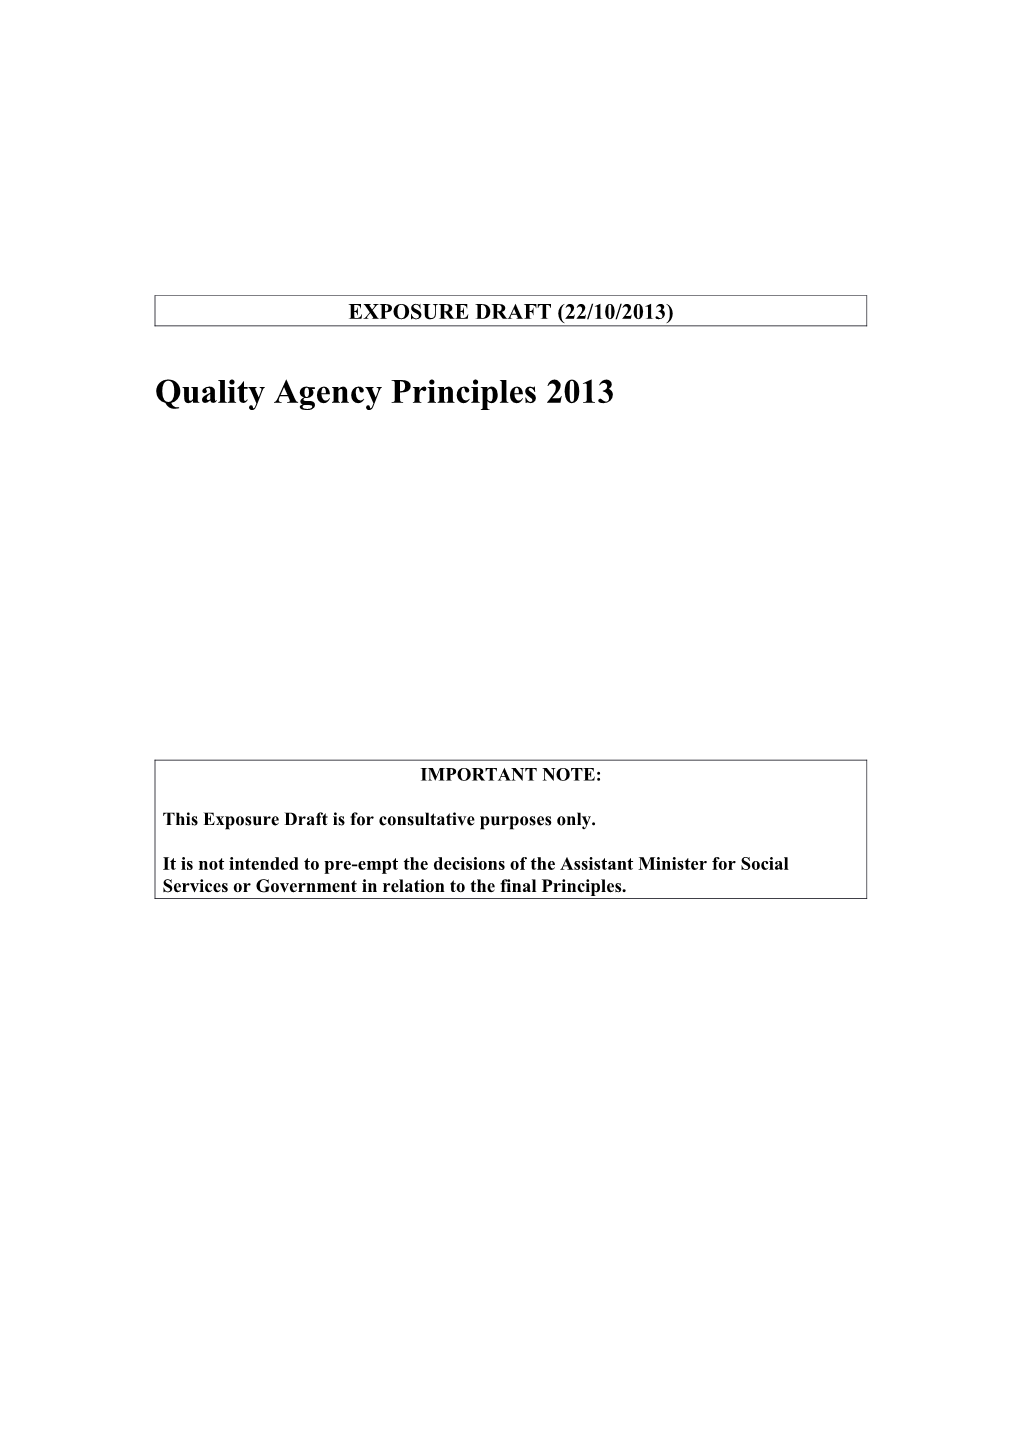 Quality Agency Principles 2013